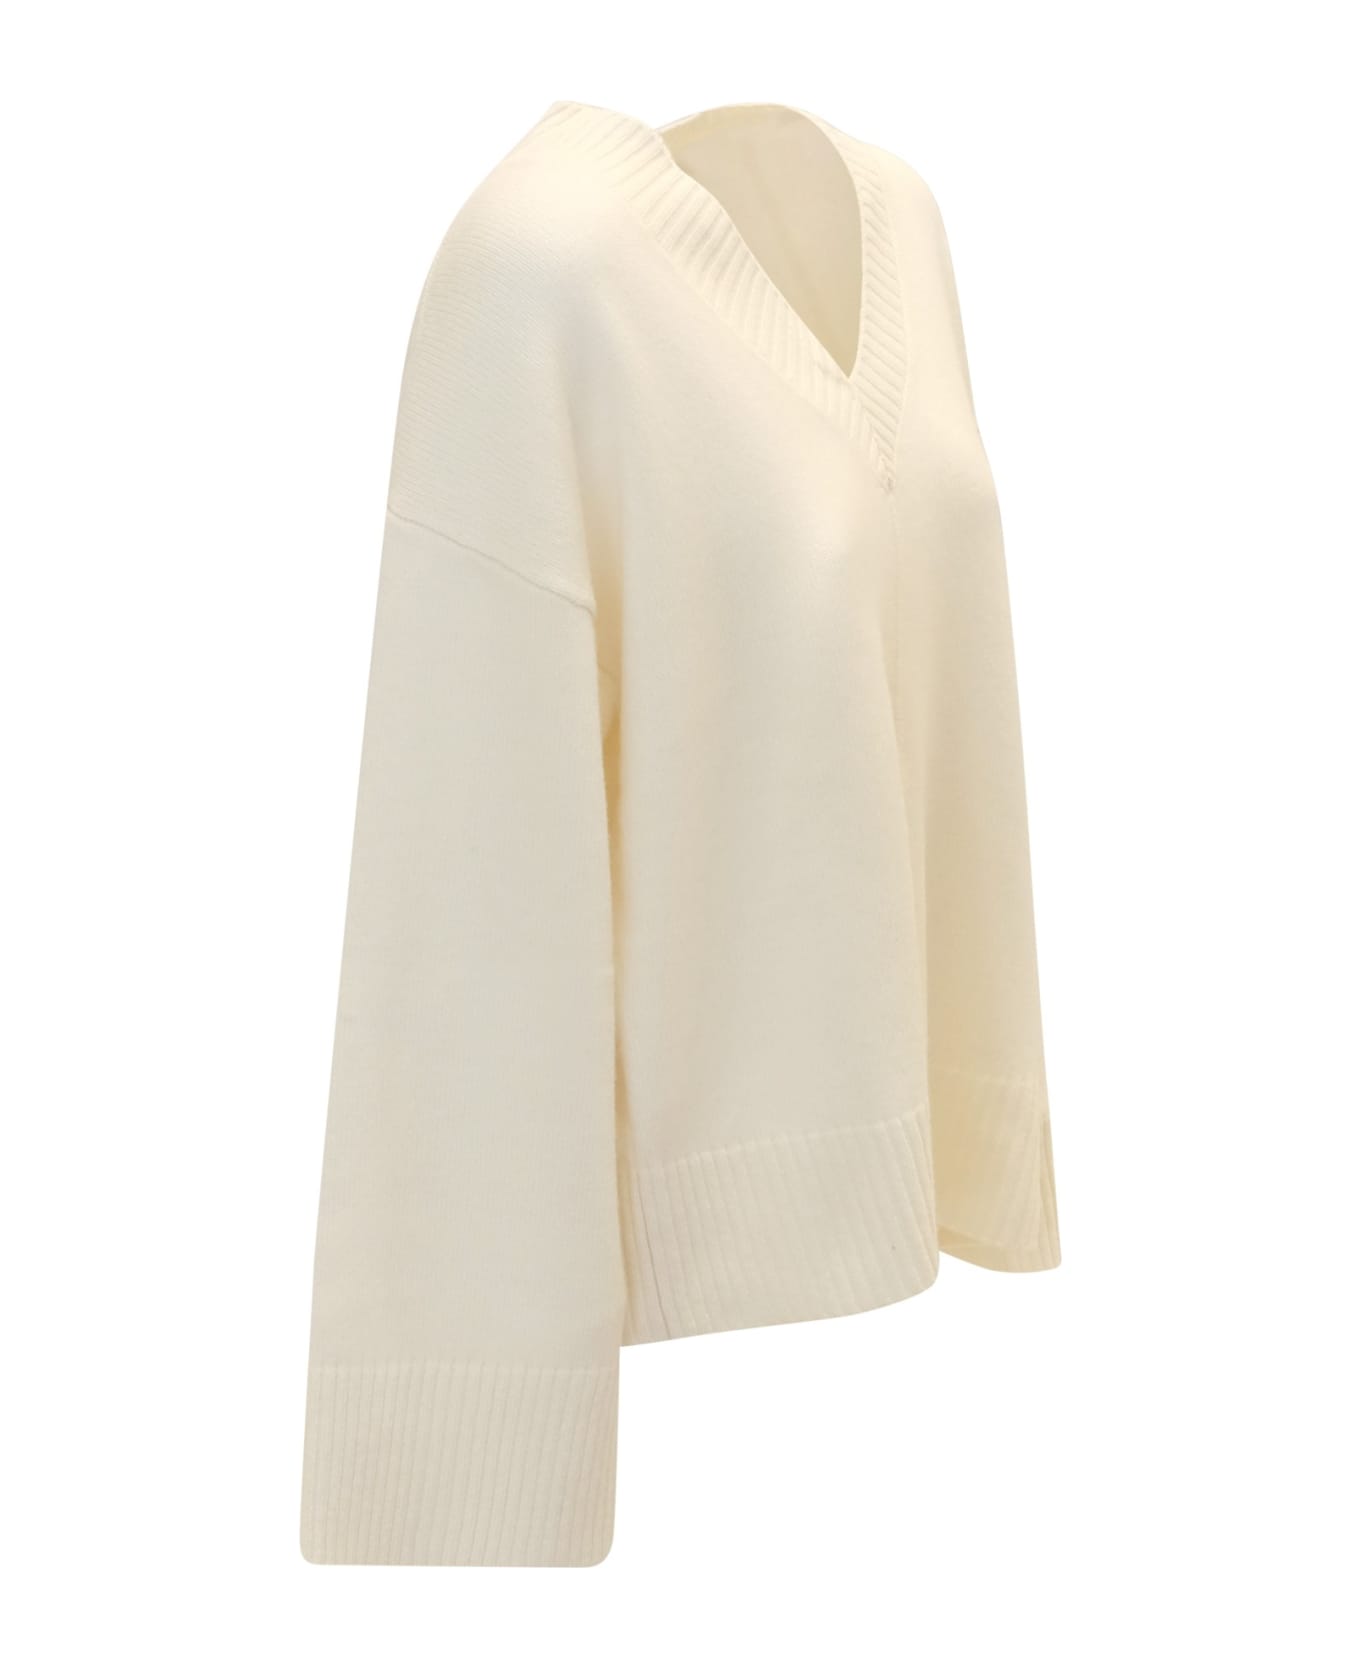 Parosh Led White Sweater - WHITE